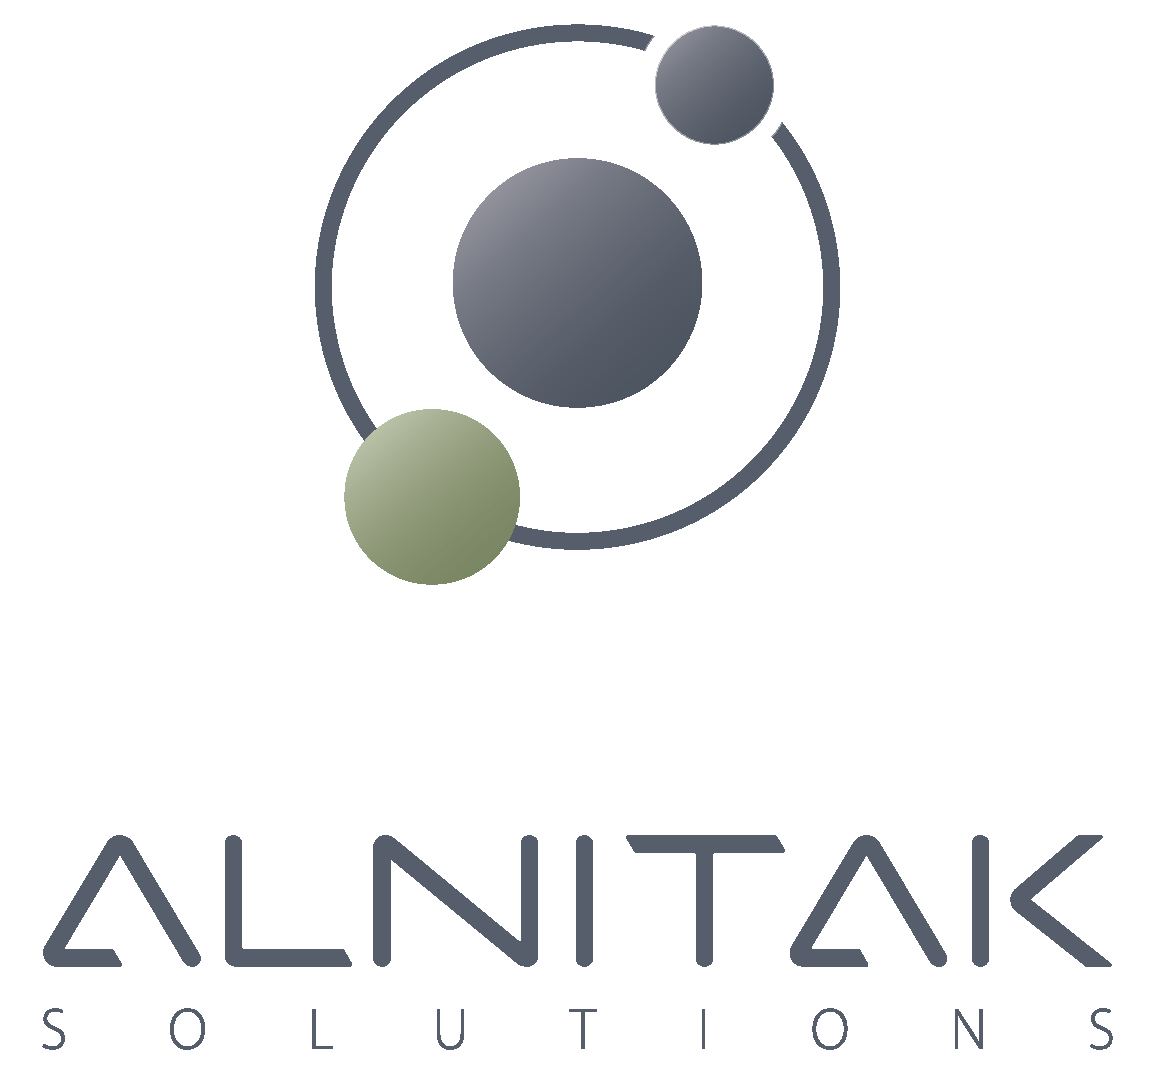 Alnitak Solutions